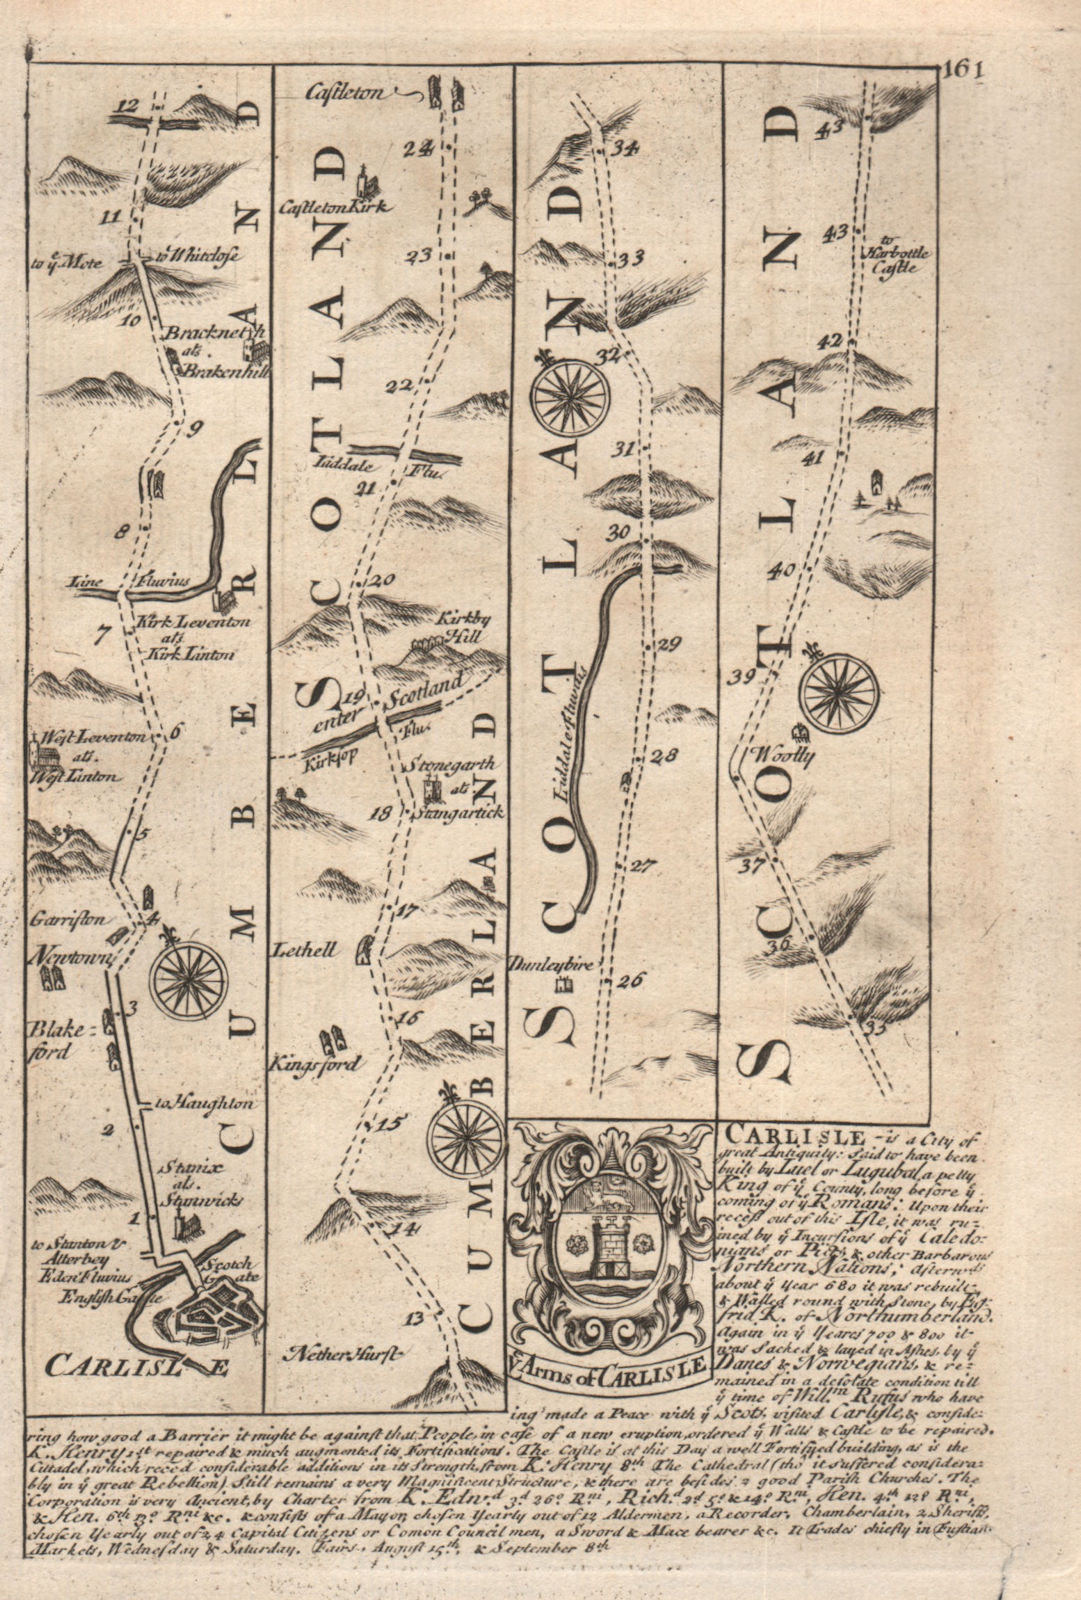 Carlisle-Blackford-Kirklinton-Kershopefoot road map by OWEN & BOWEN 1753